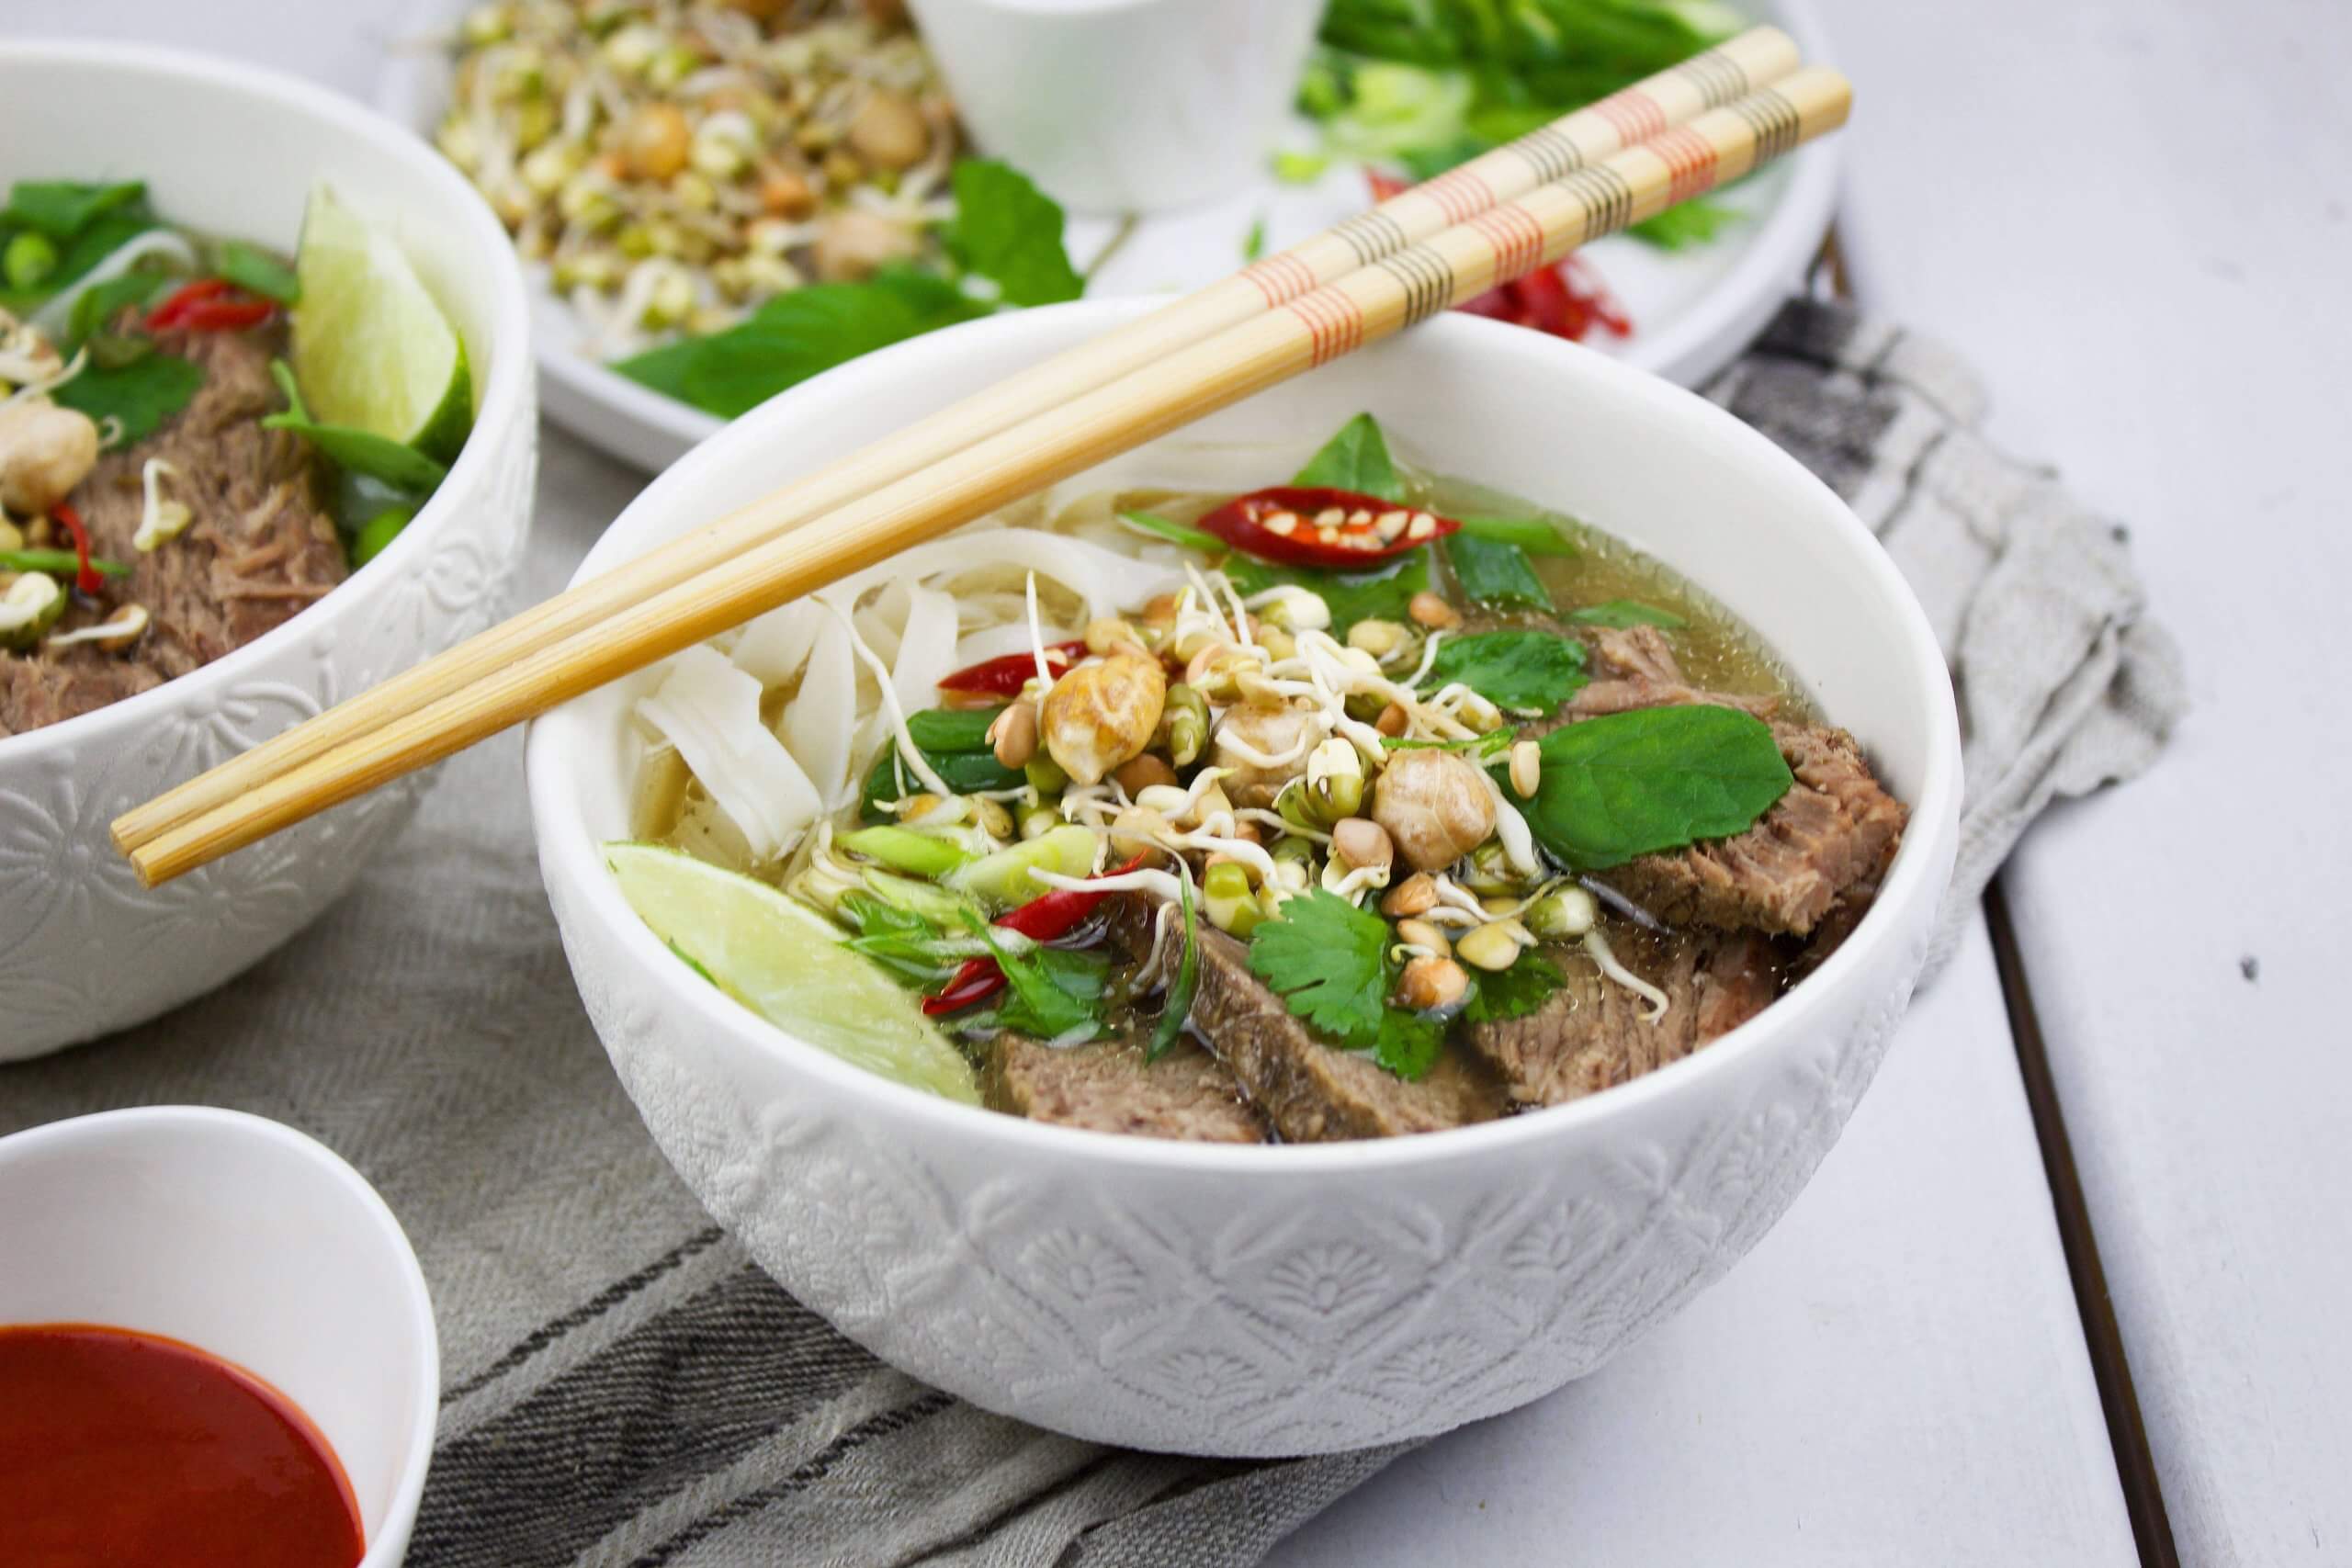 PHO BO - The classic Vietnamese soup recipe